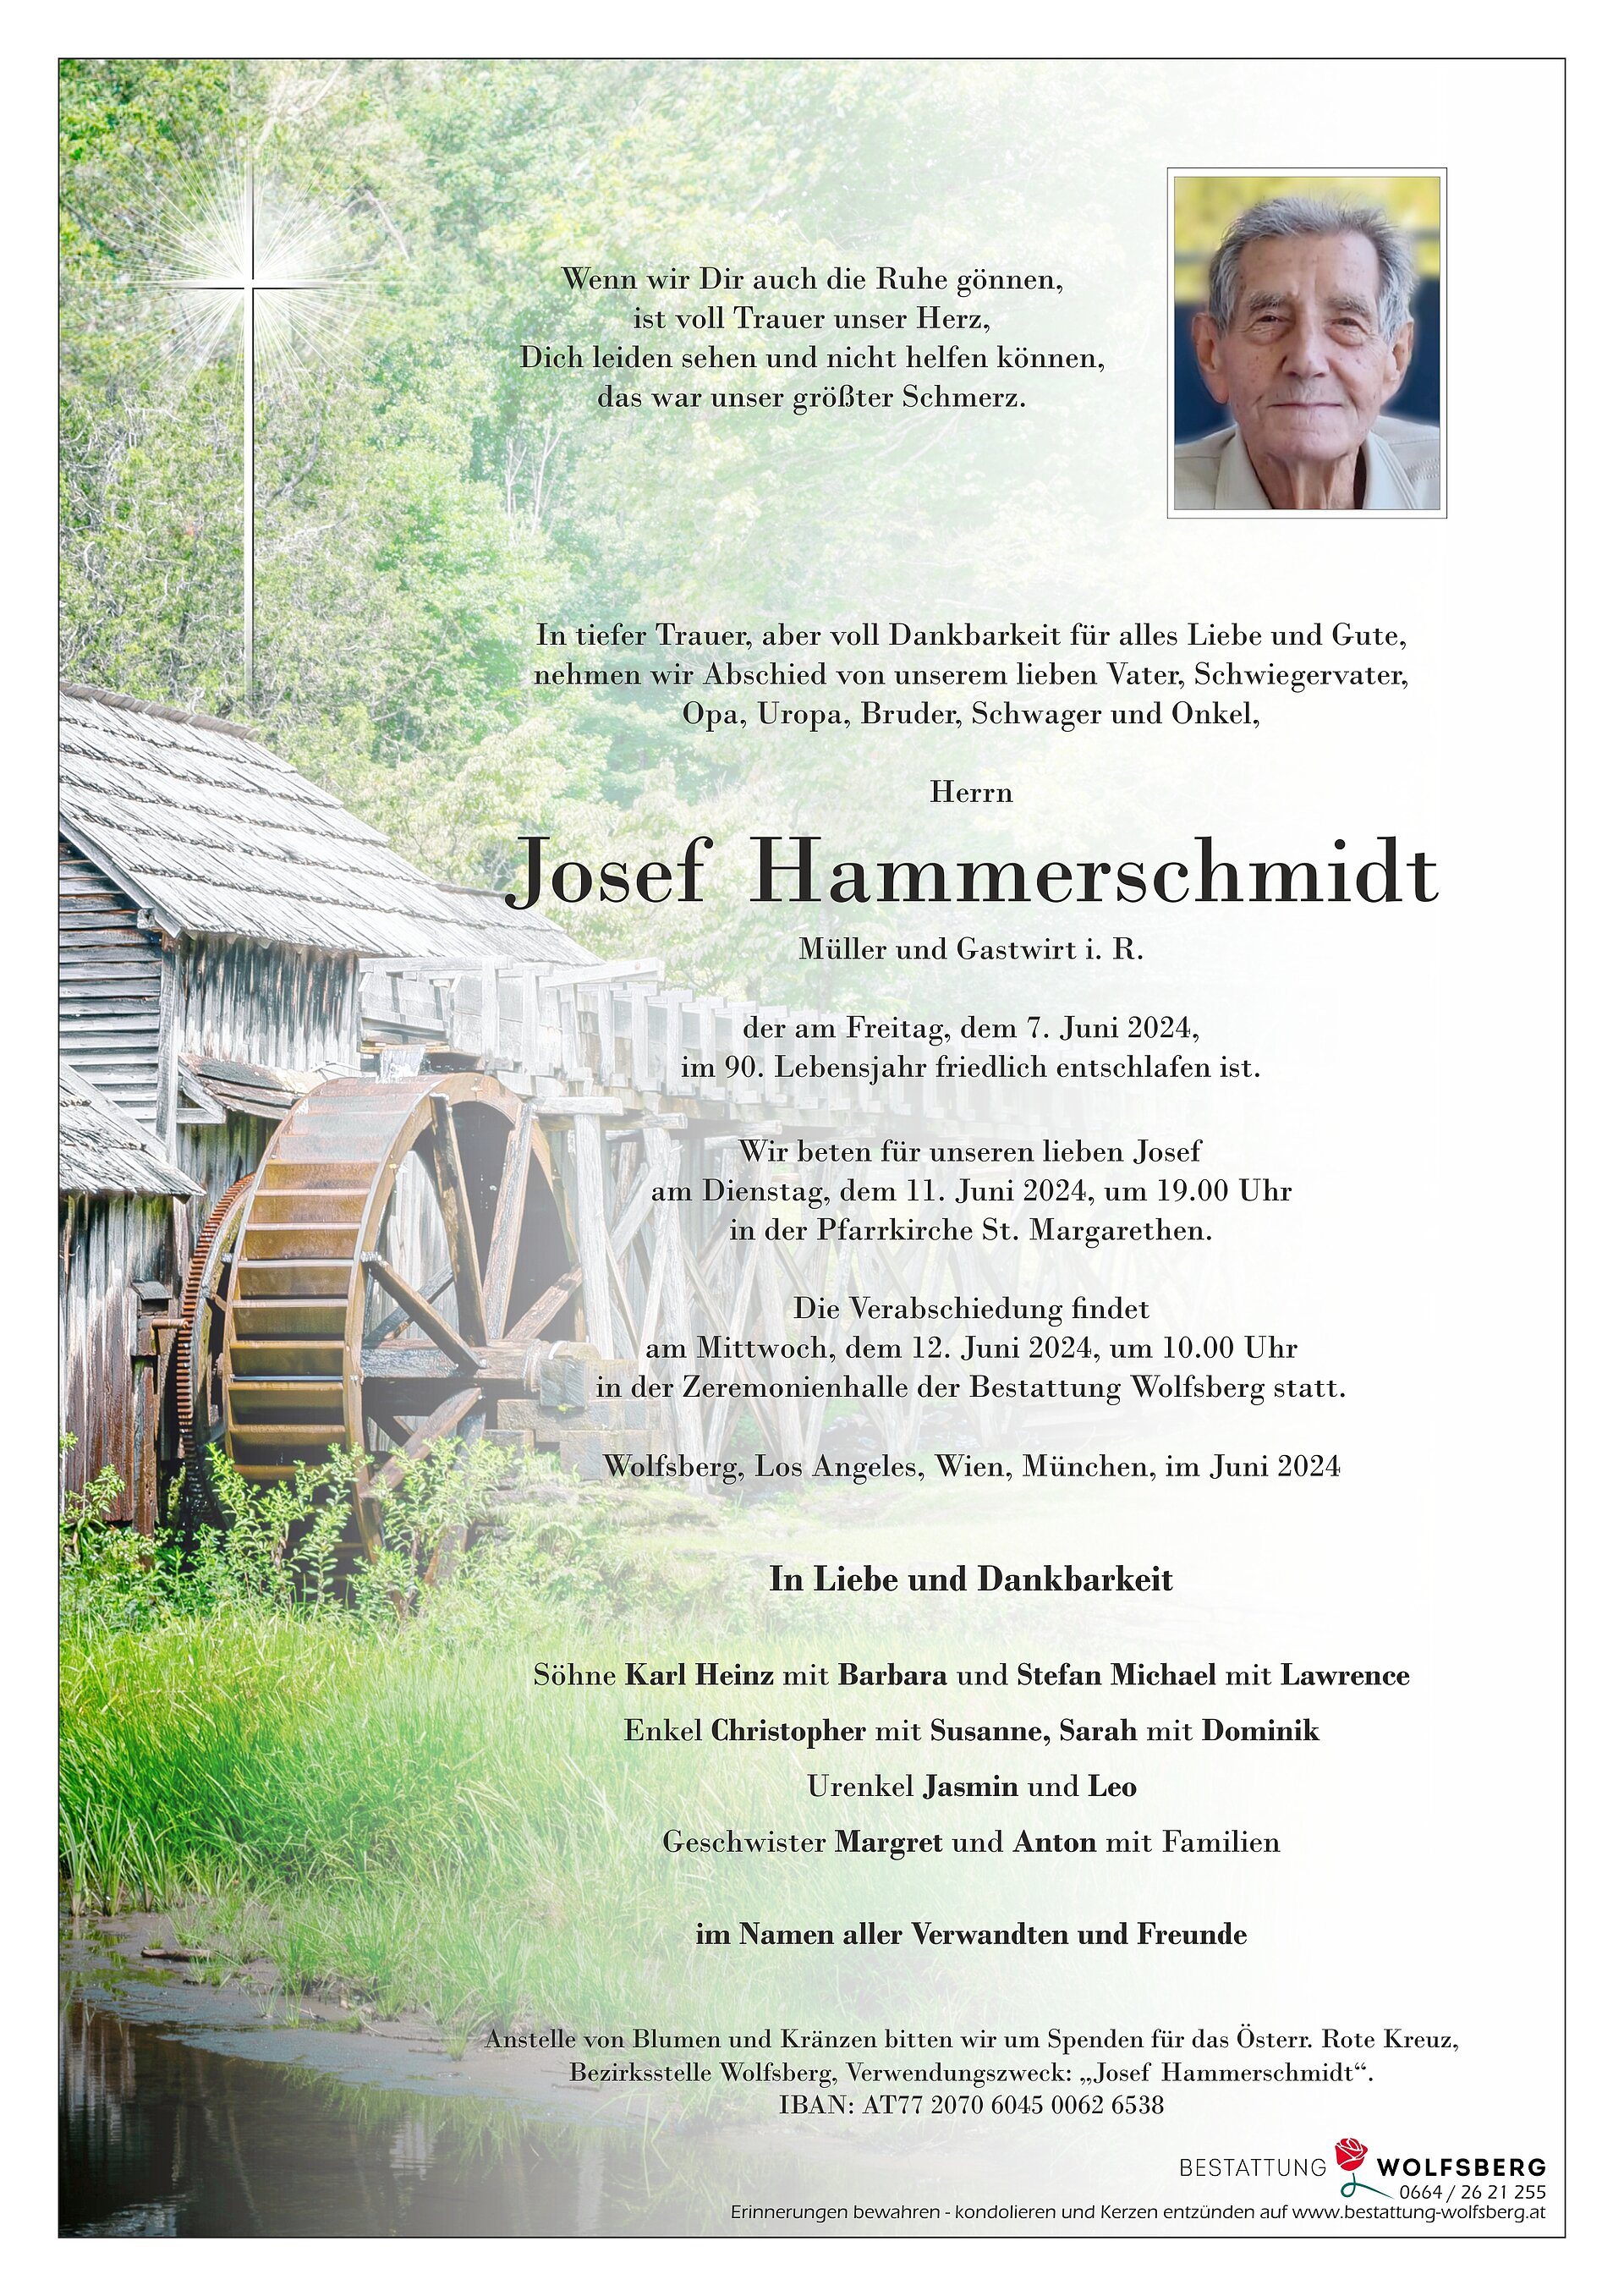 Hammerschmidt Josef.jpg